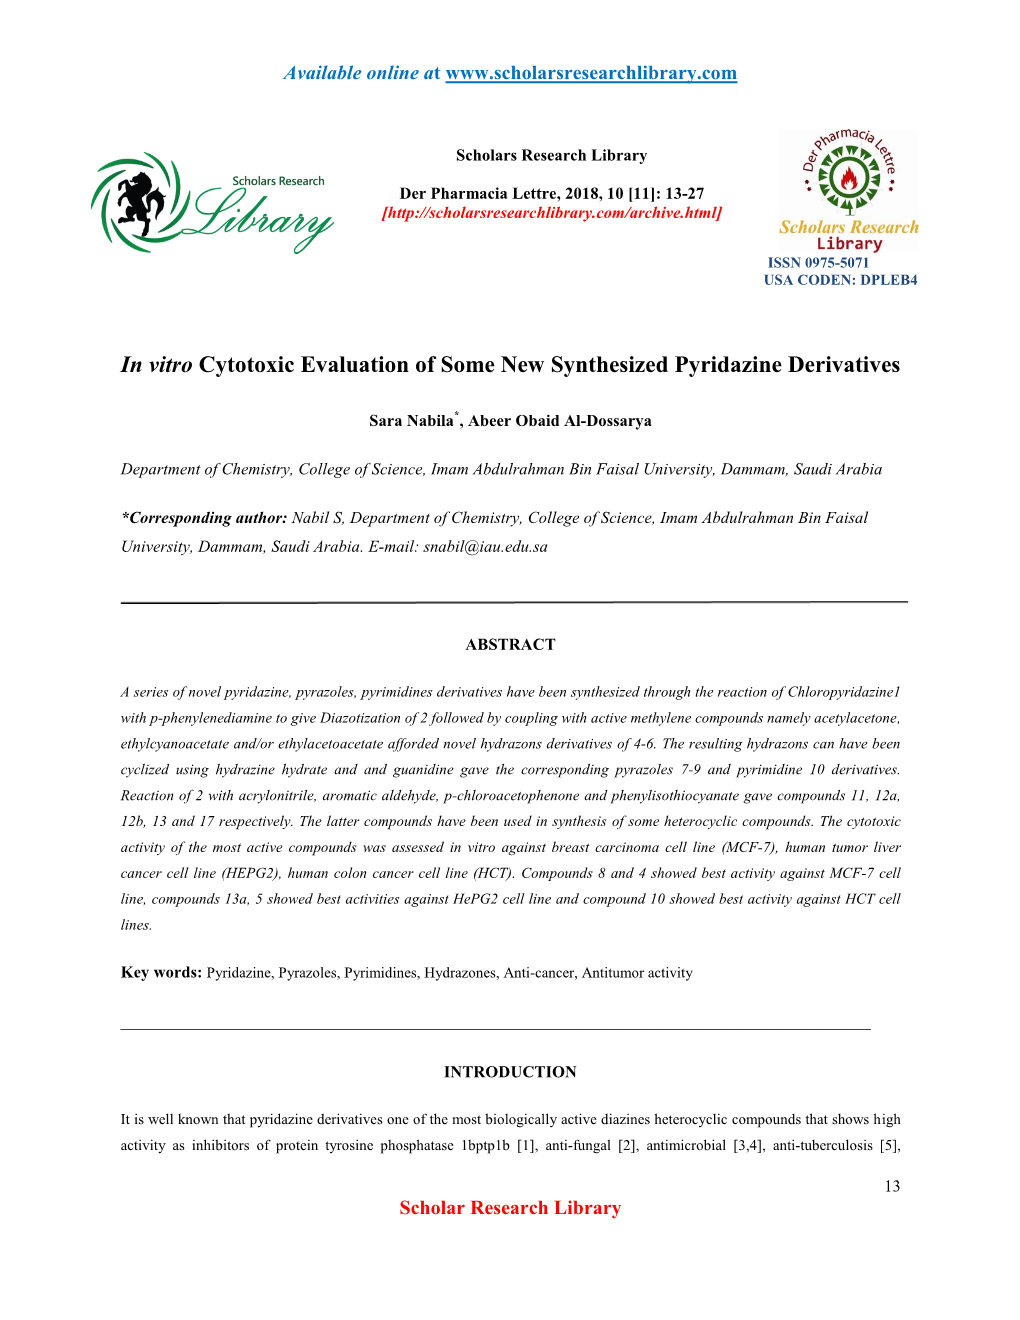 In Vitro Cytotoxic Evaluation of Some New Synthesized Pyridazine Derivatives